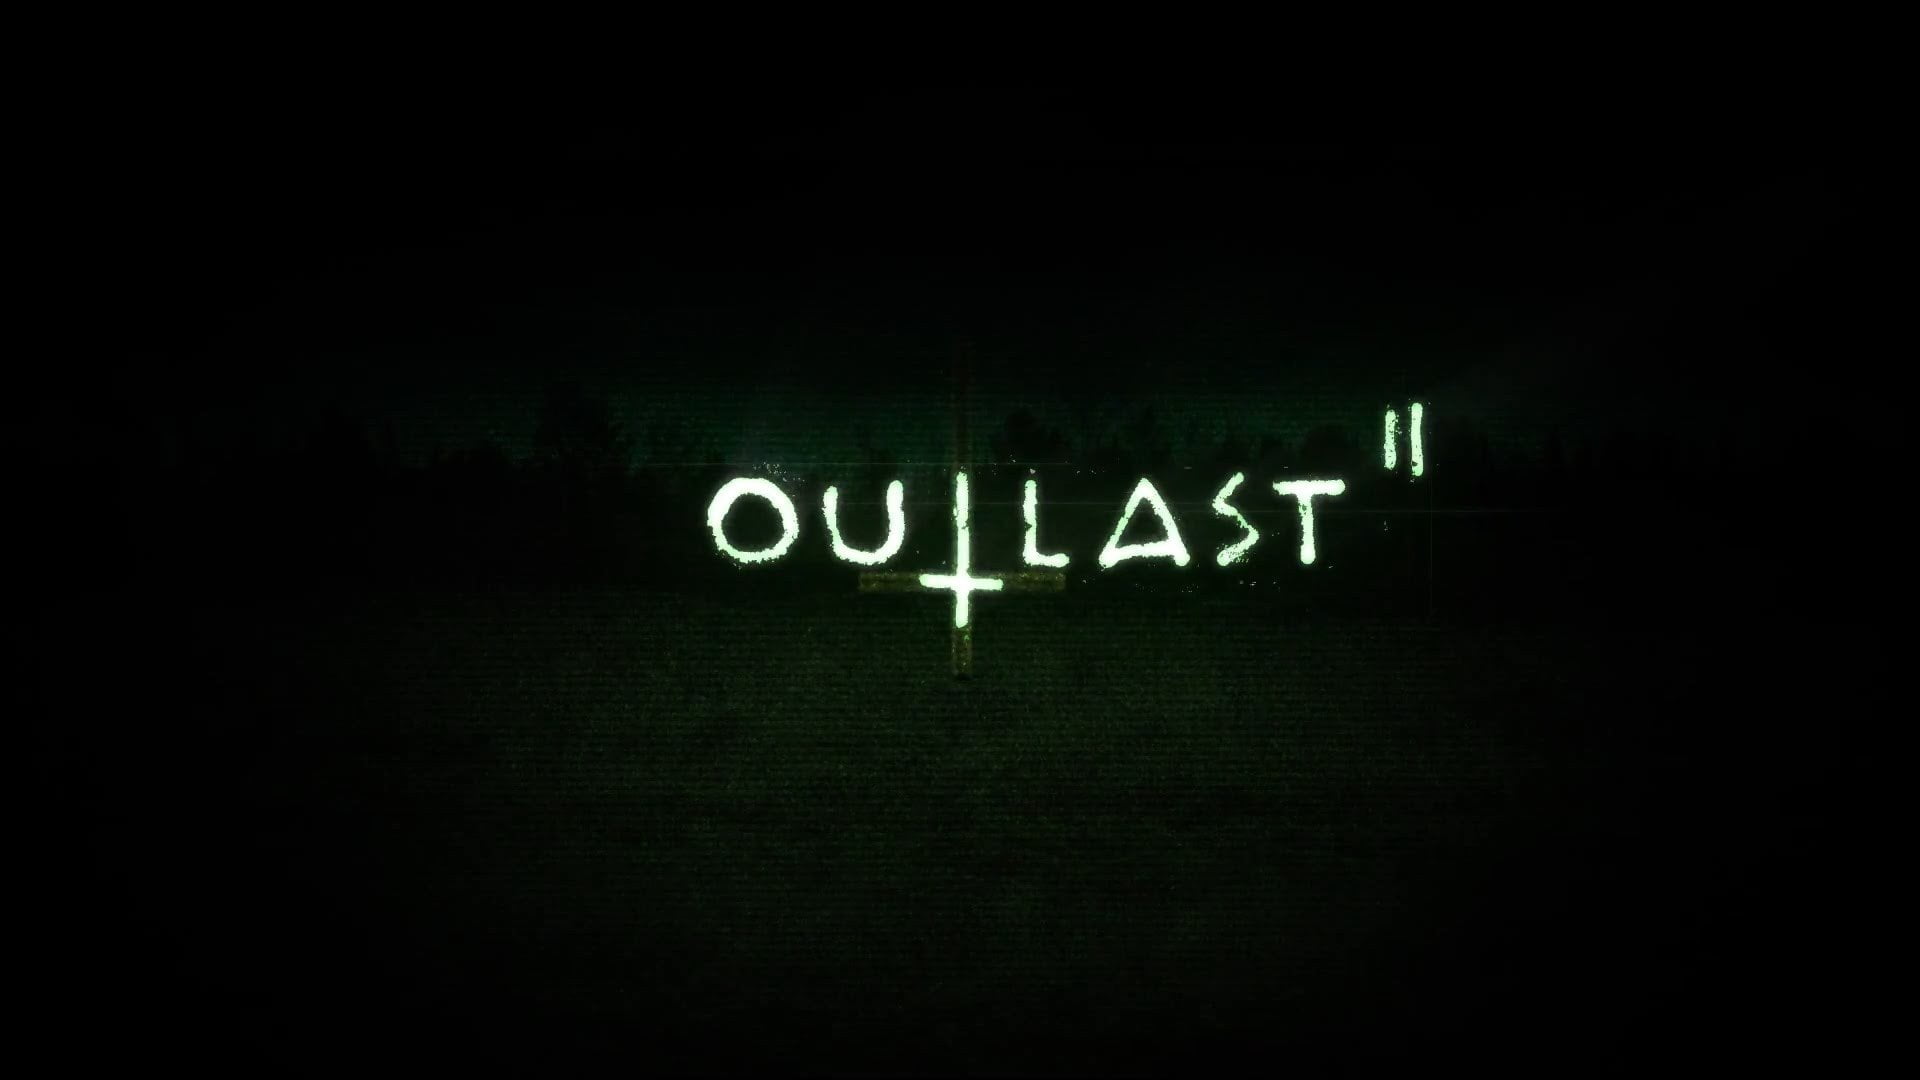 Video Game, Outlast 2, Logo, text, communication, western script